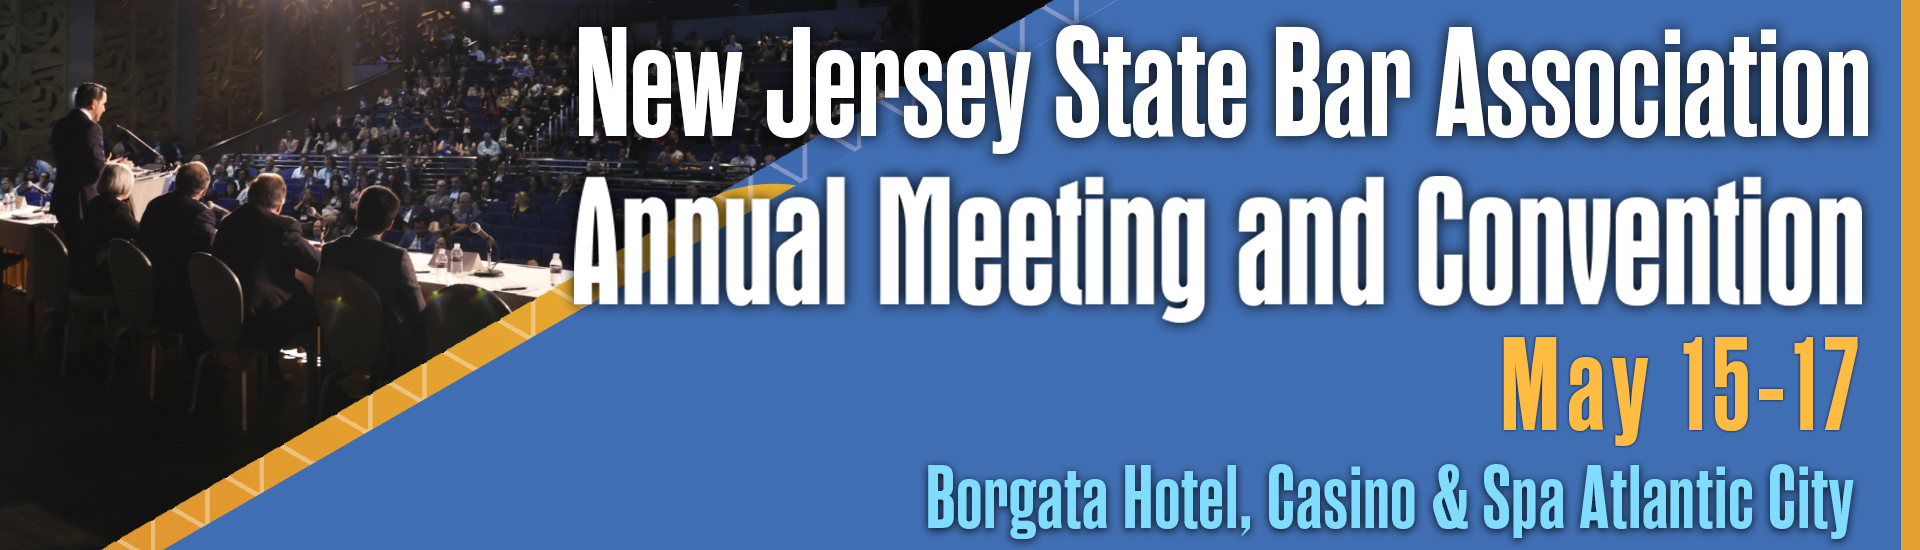 NJ State Bar Association’s Annual Meeting